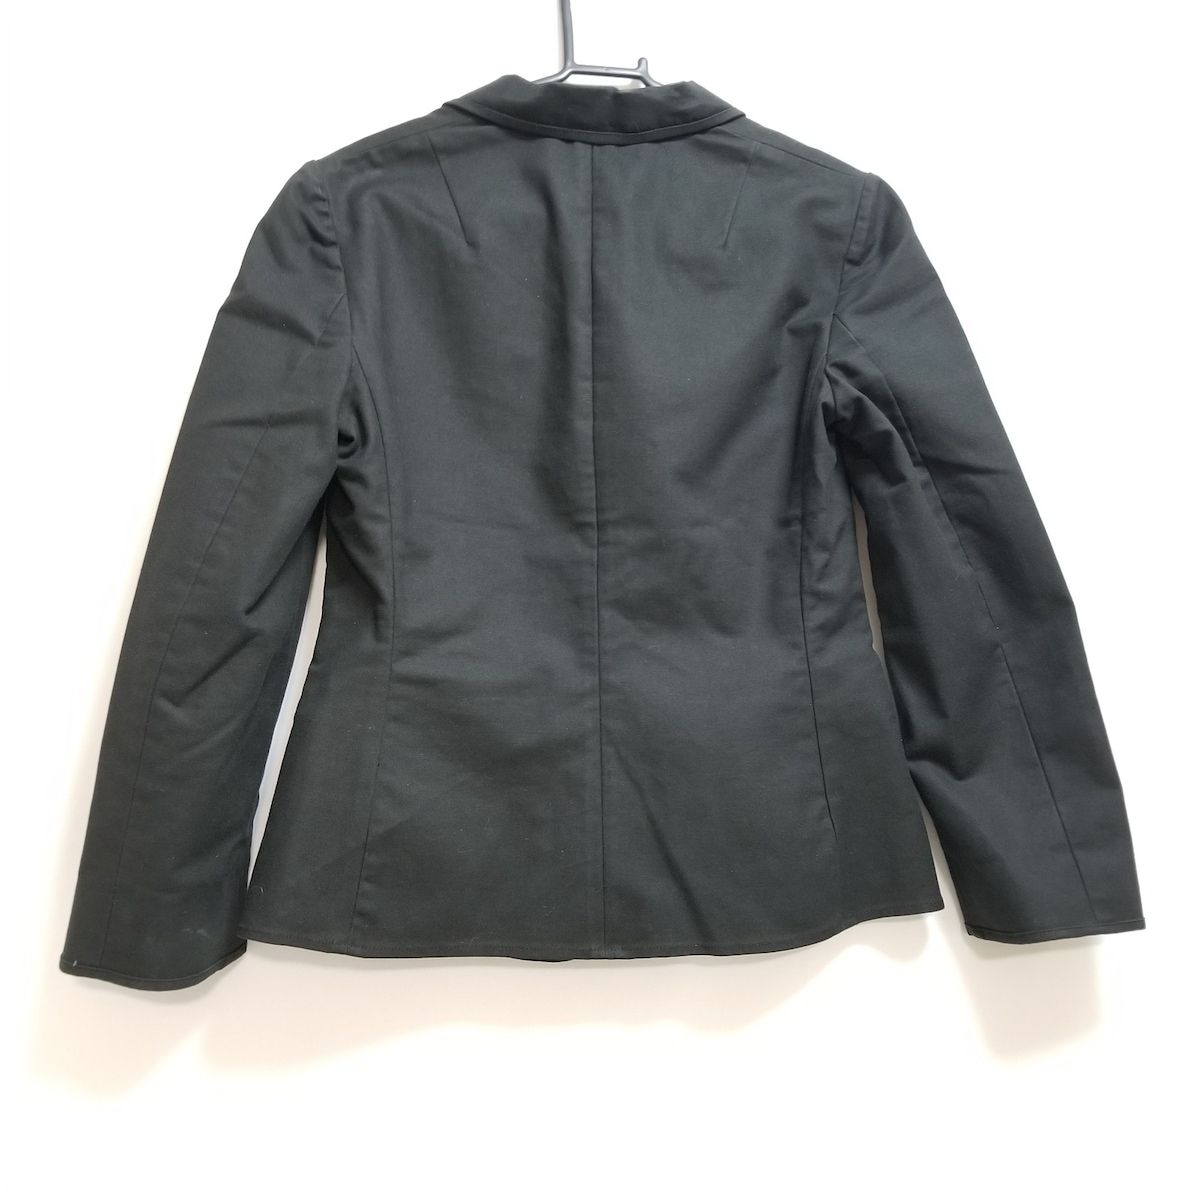 DOLCE&GABBANA(ドルチェアンドガッバーナ) ジャケット サイズ38 S レディース 黒 長袖/春・秋物